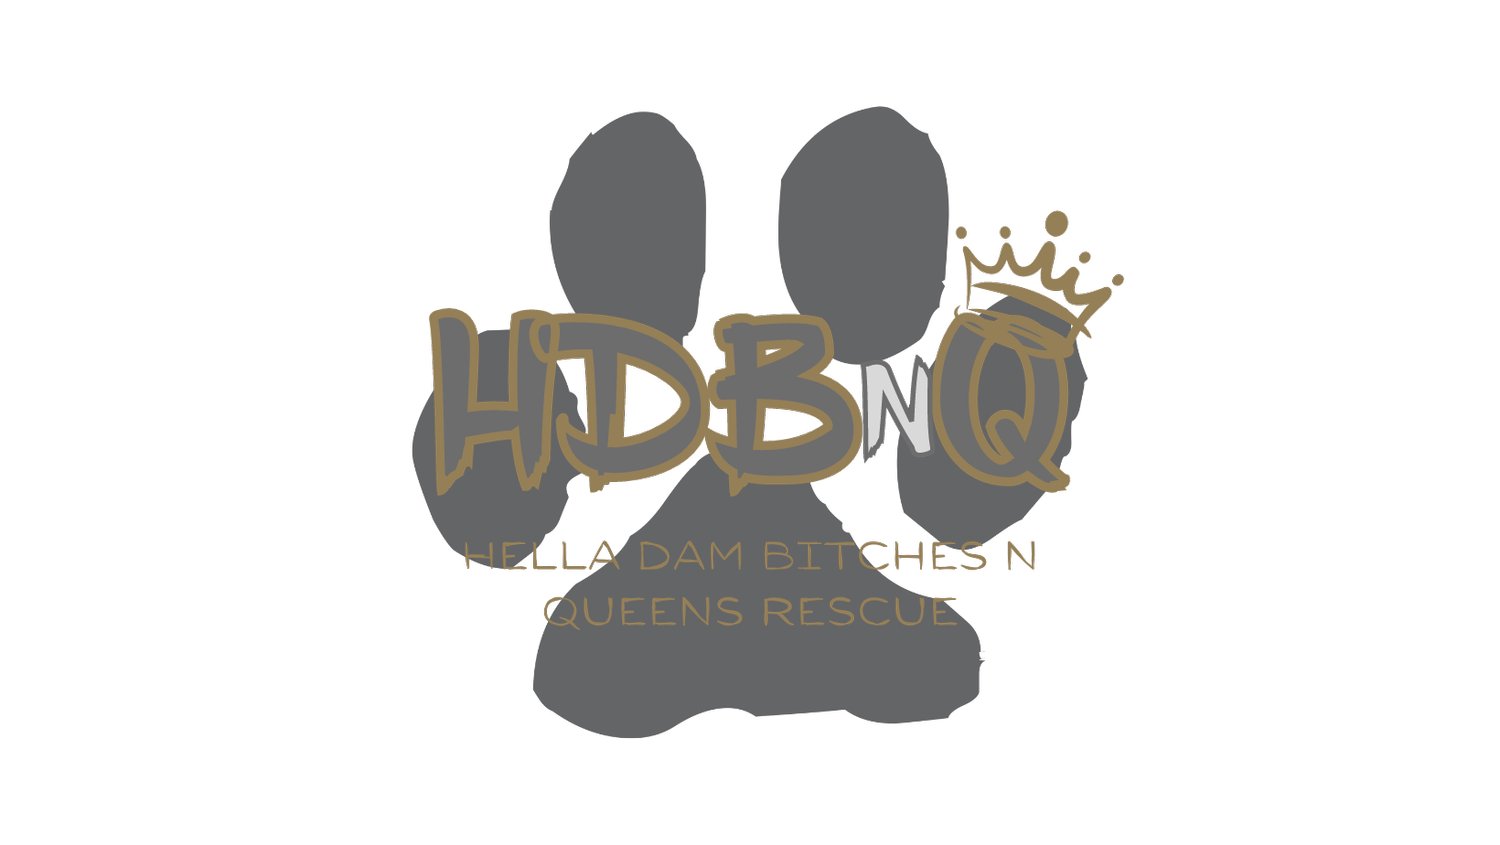 Hella Dam Bitches n Queens Rescue